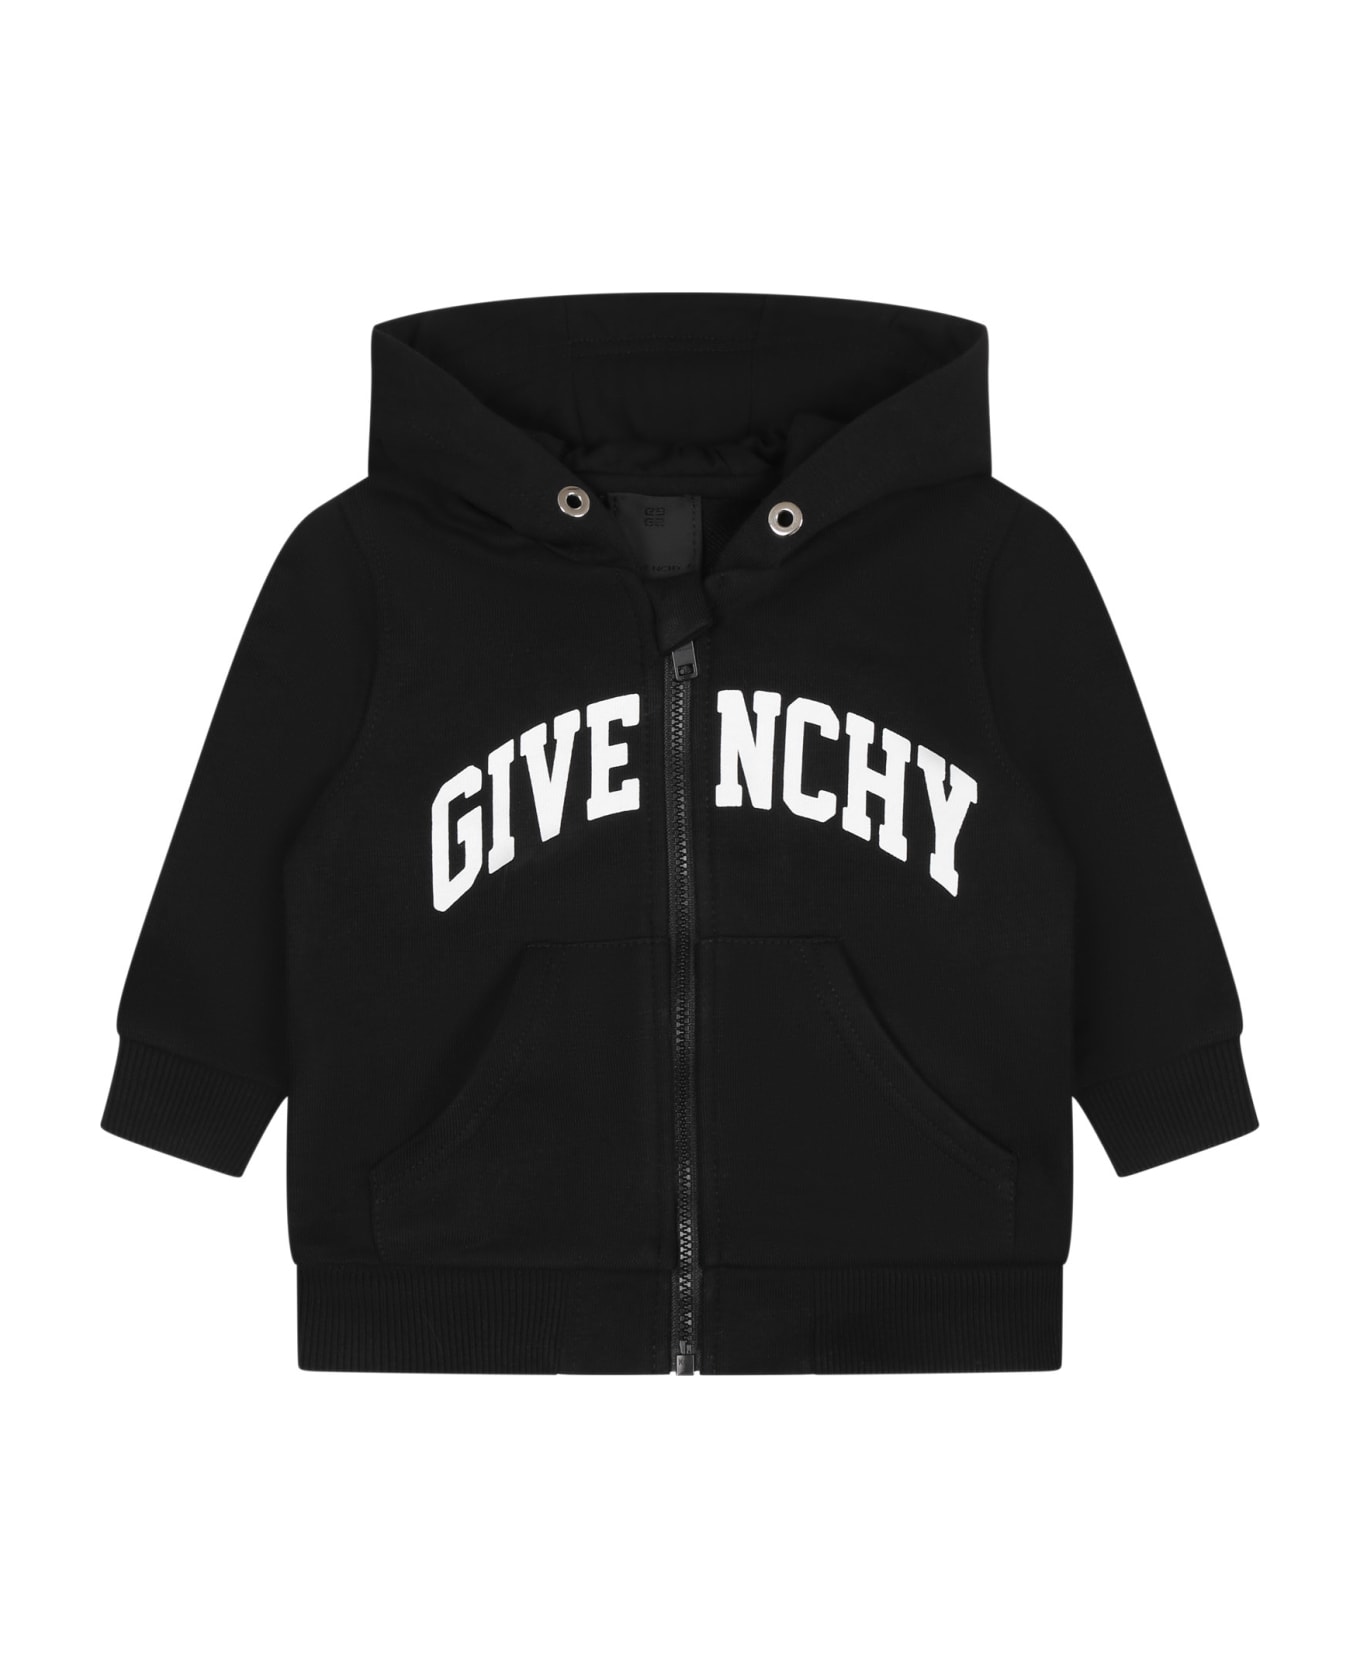 Givenchy Black Sweatshirt For Baby Boy With Logo - Black